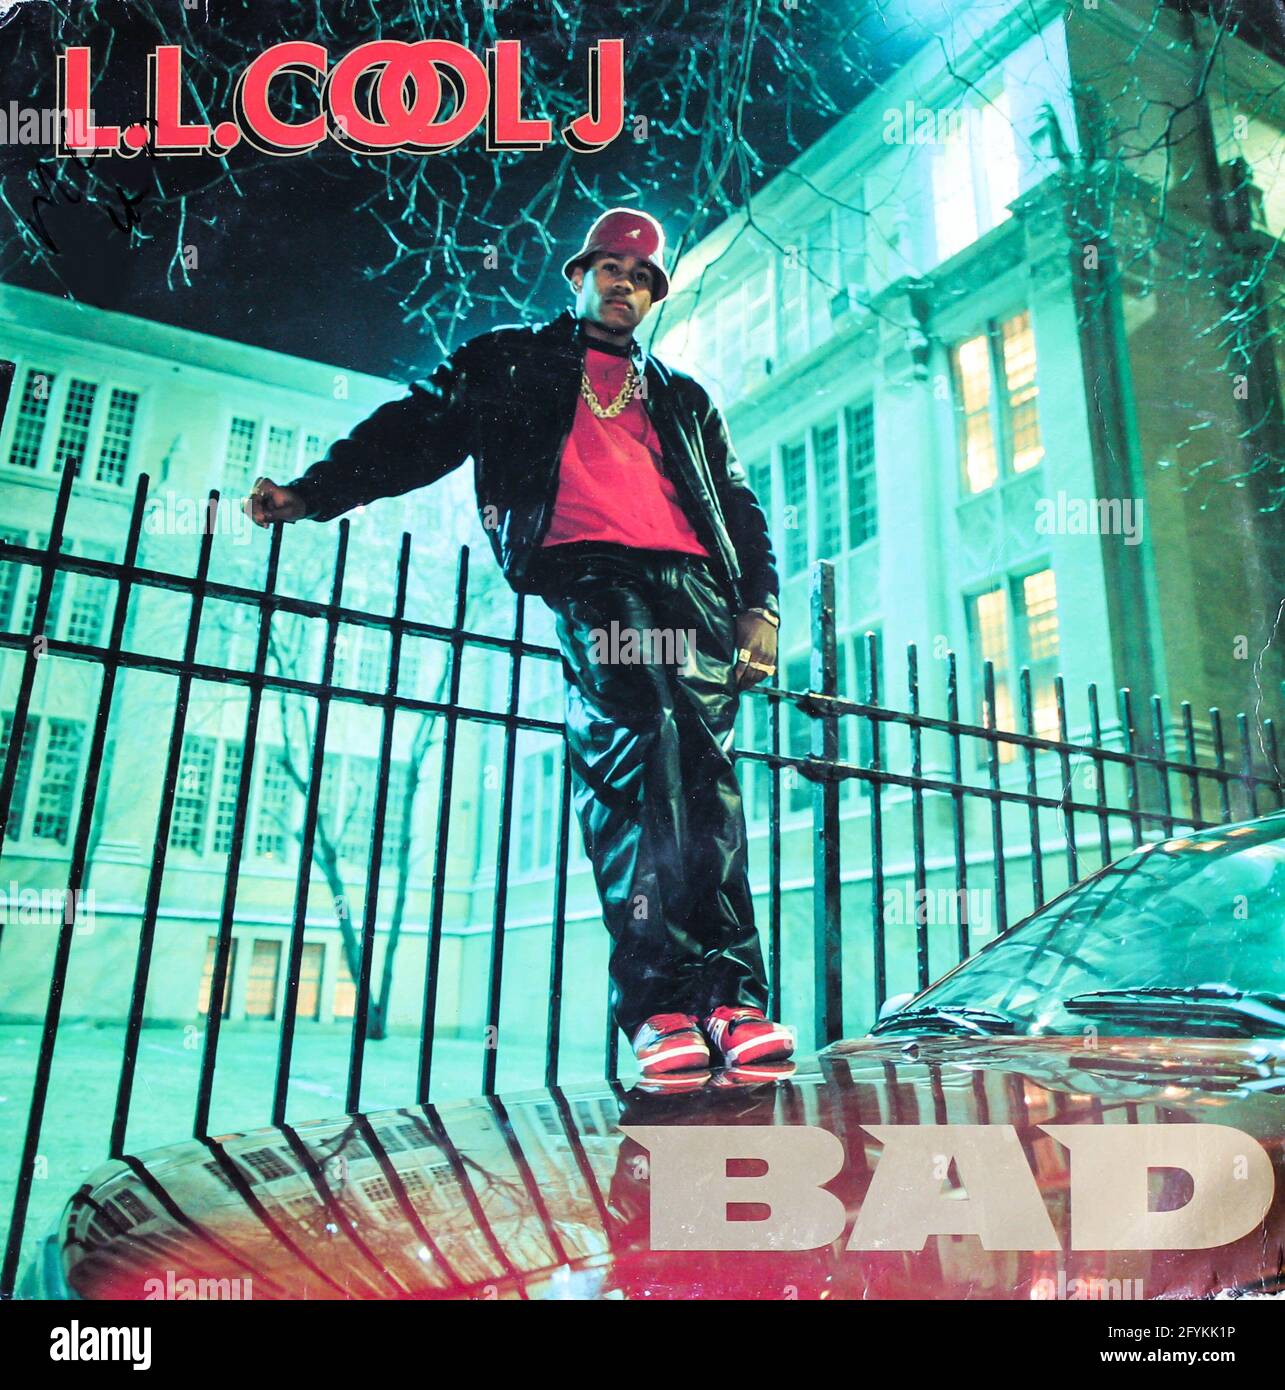 Hip hop artist, LL Cool J music album on vinyl record LP disc. Titled: Bigger and Deffer album cover Stock Photo